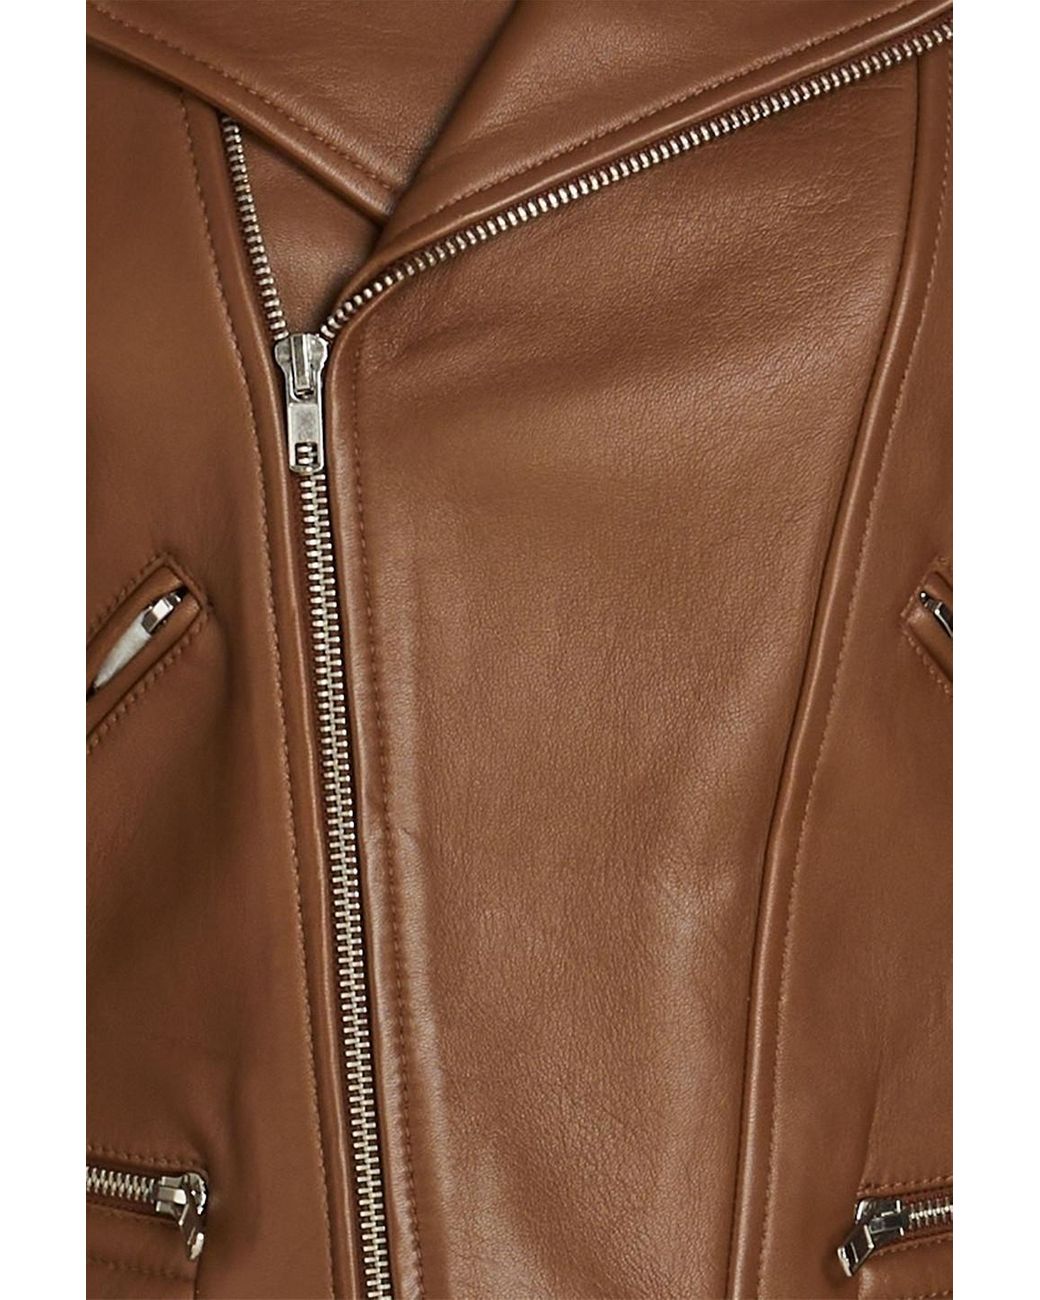 223BLUM Leather biker-style jacket - Blazers & Jackets - Maje.com